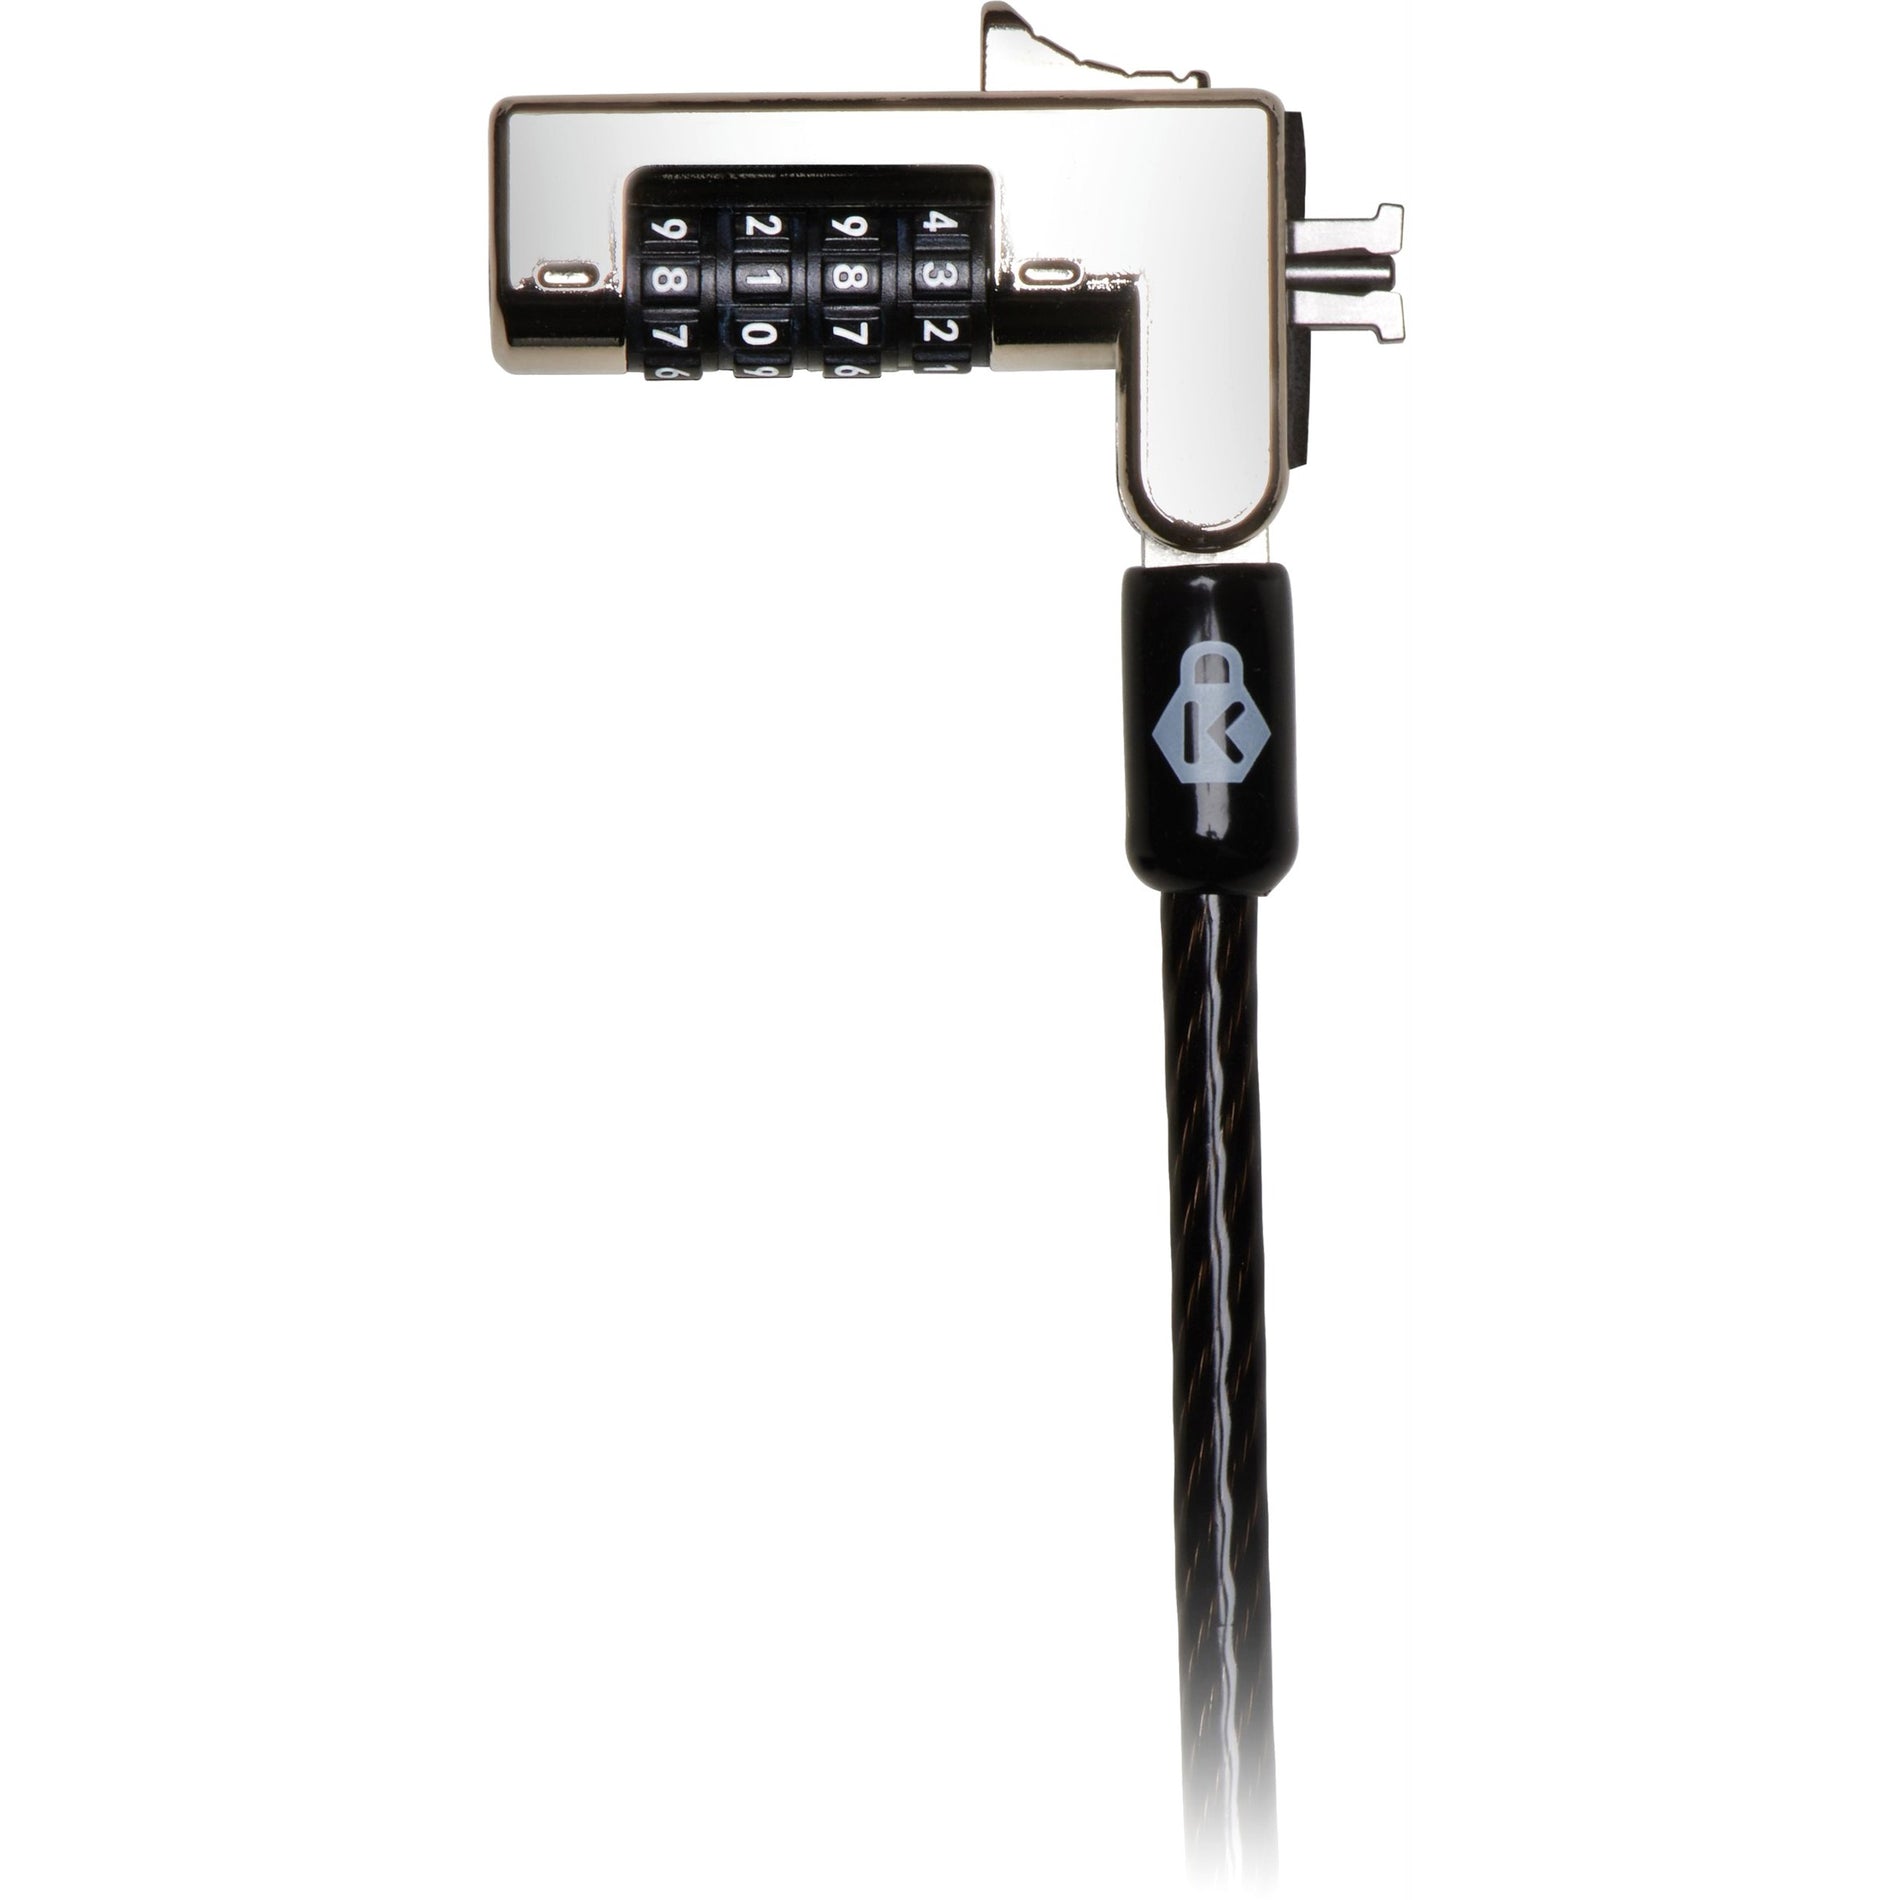 Kensington K60603WW Slim NanoSaver Combination Laptop Lock, 4-Digit Resettable Cable Lock